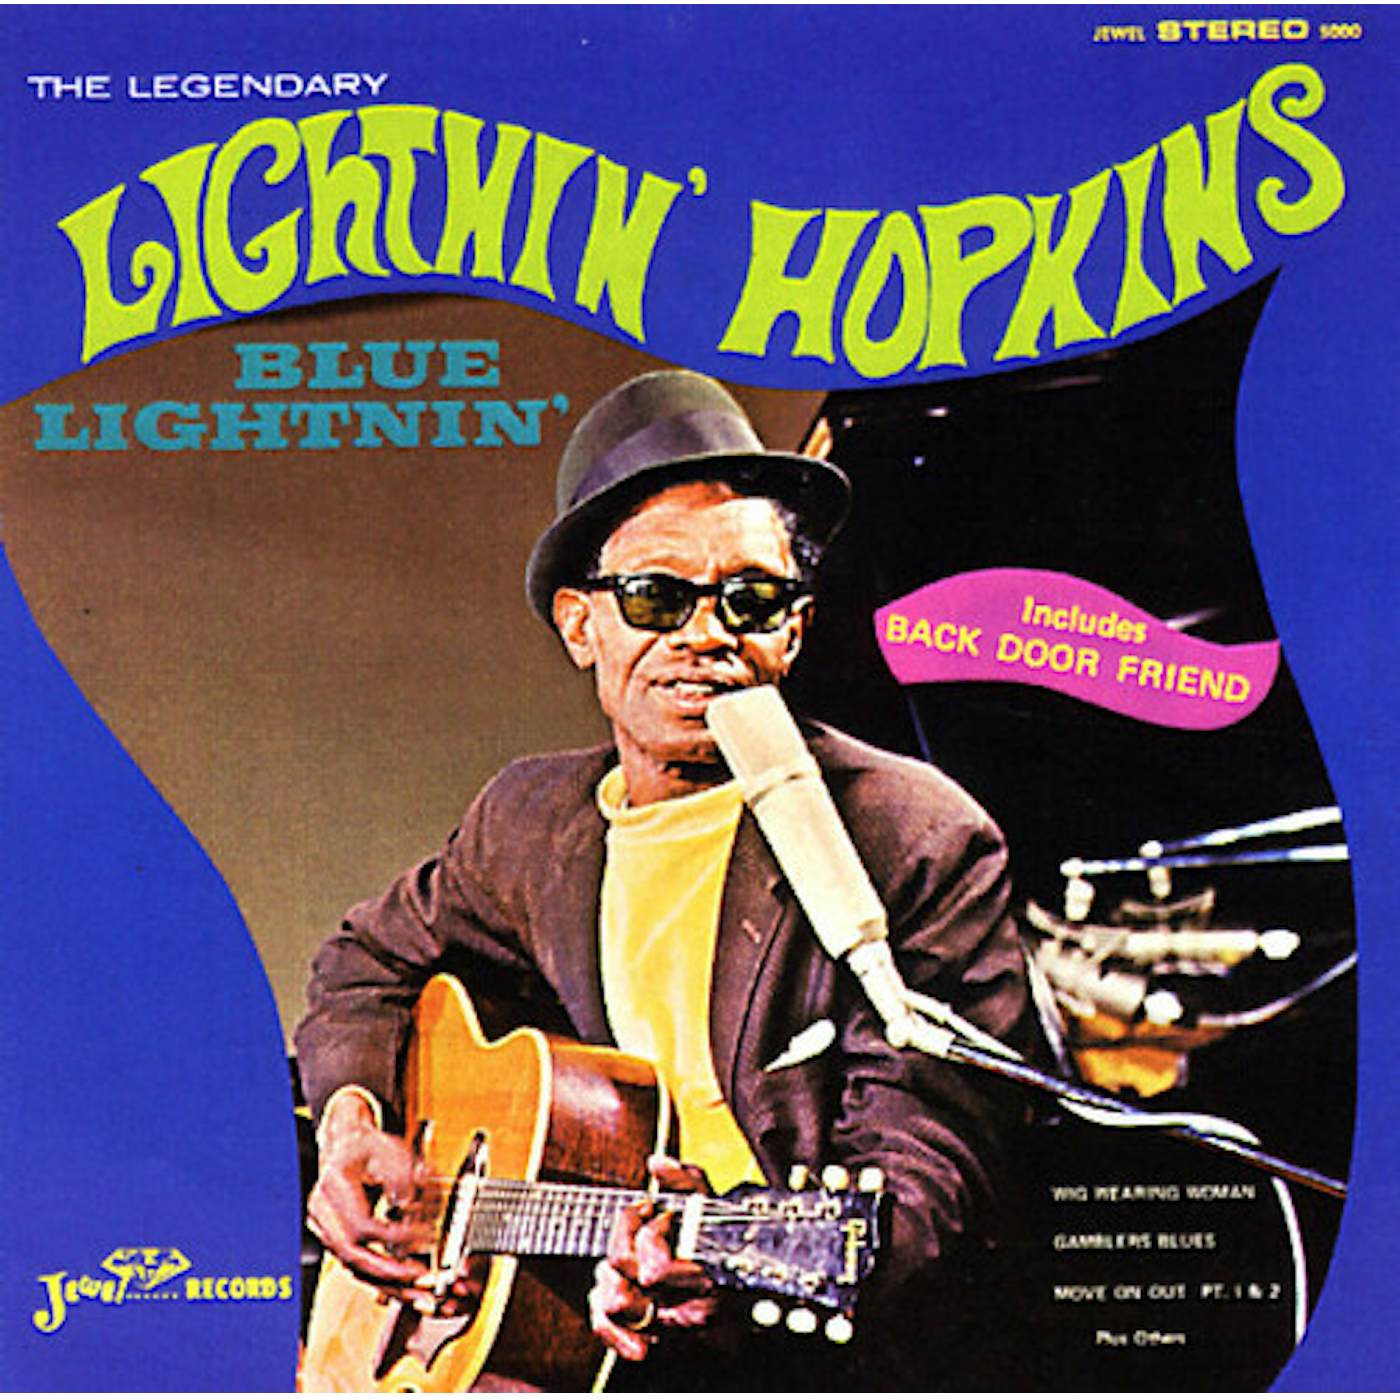 Lightnin' Hopkins BLUE LIGHTNIN' Vinyl Record